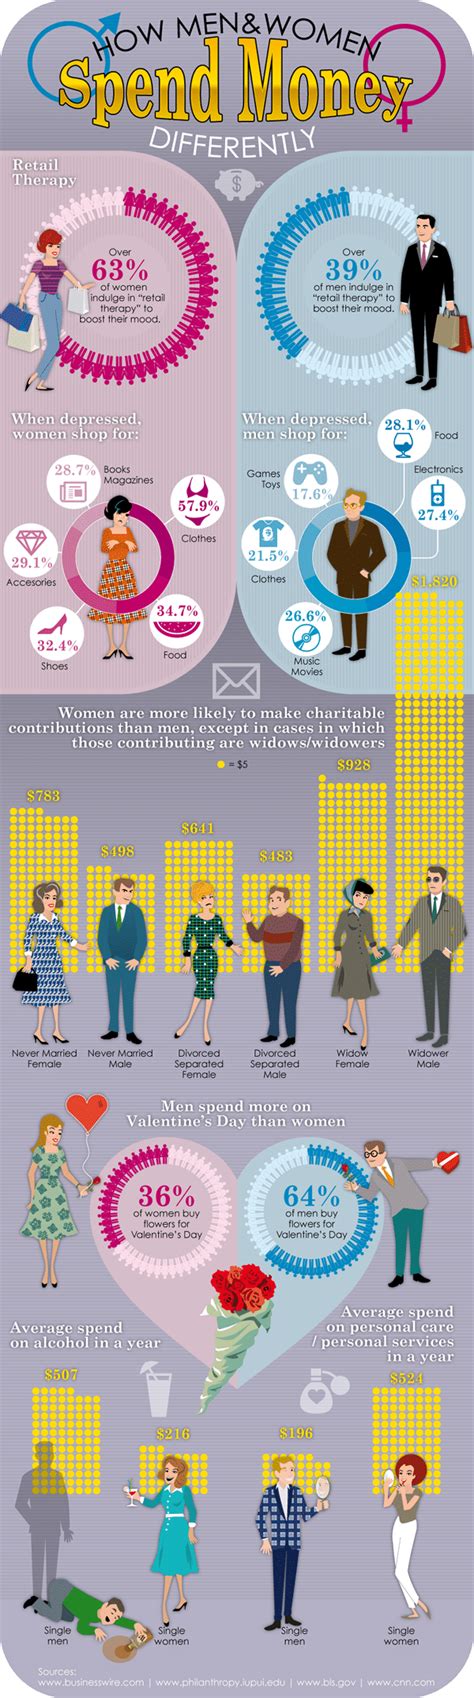 Men And Women S Spending Habits Compared [infographic] Bit Rebels